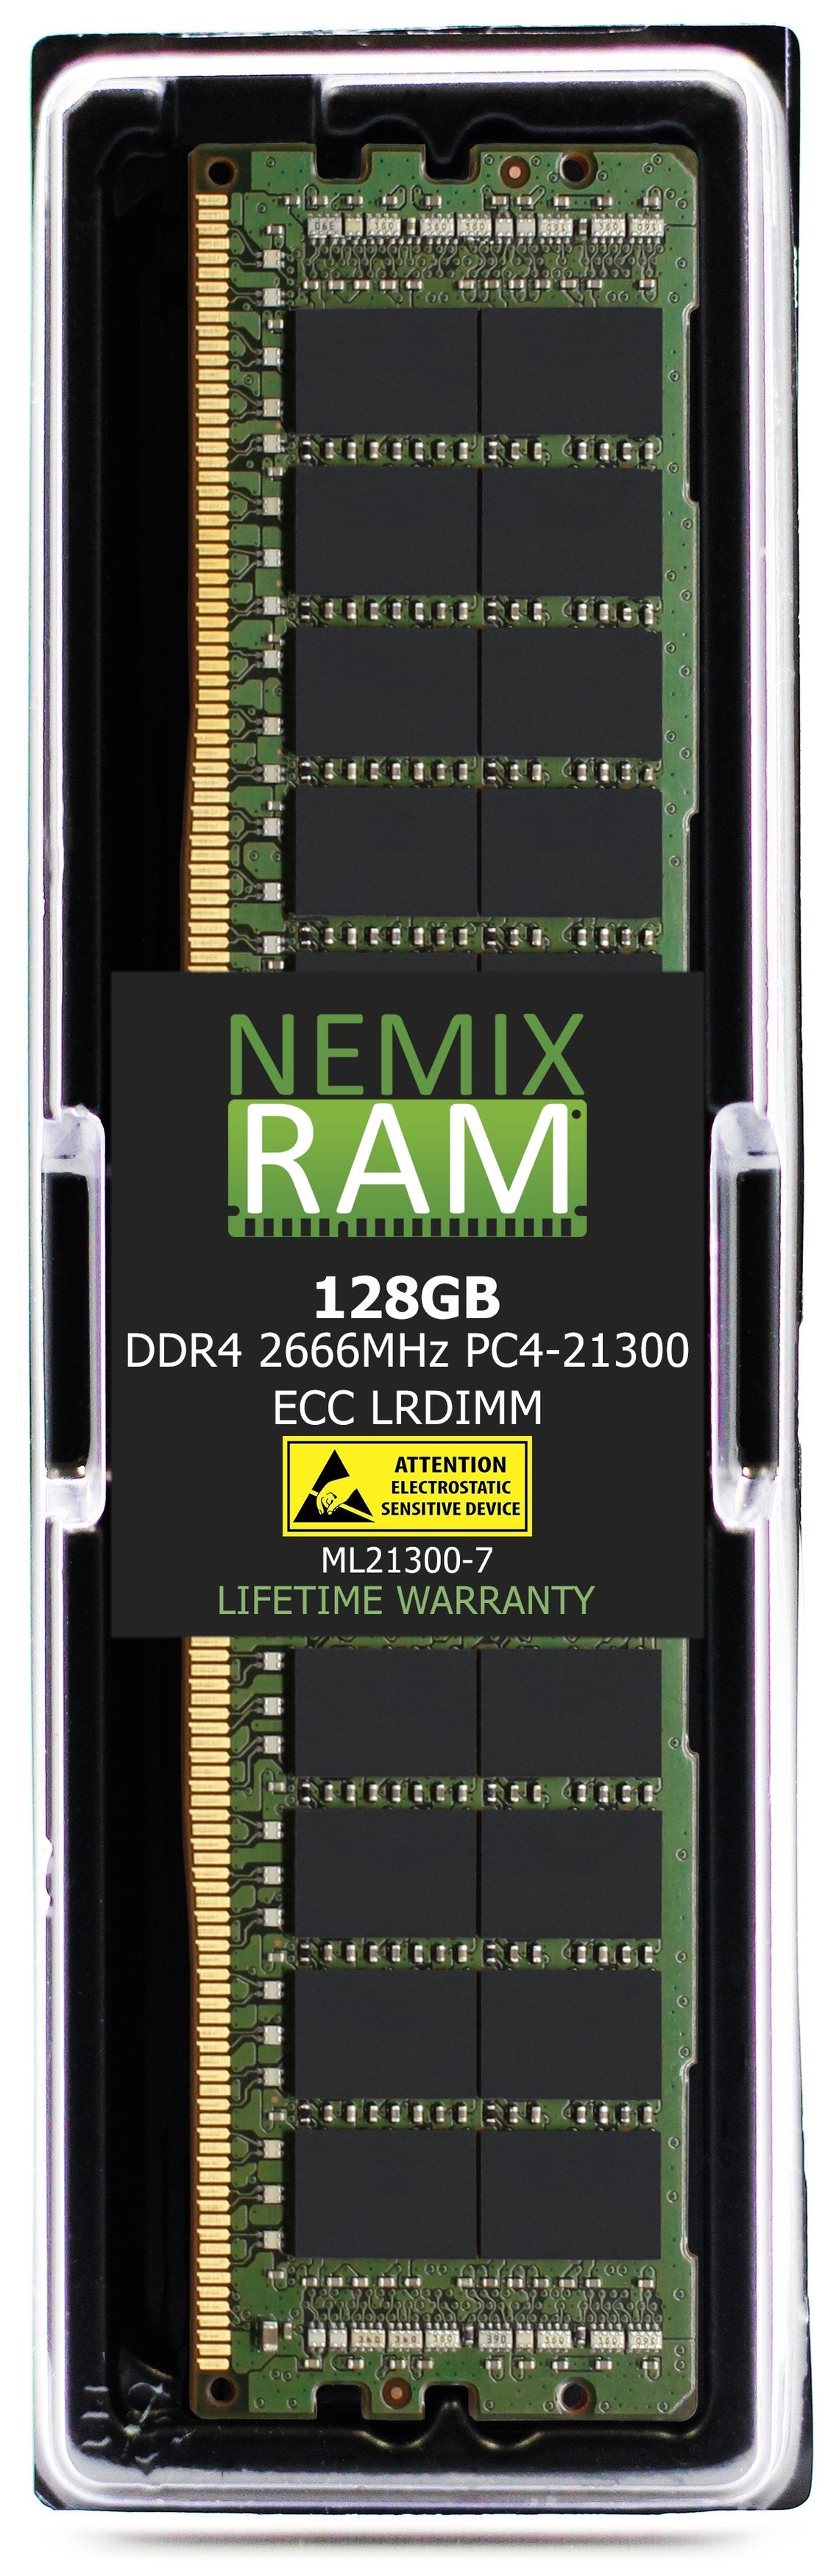 NEC Express5800 D120h Memory Module N8102-707F 128GBDDR4 2666MHZ PC4-21300 LRDIMM